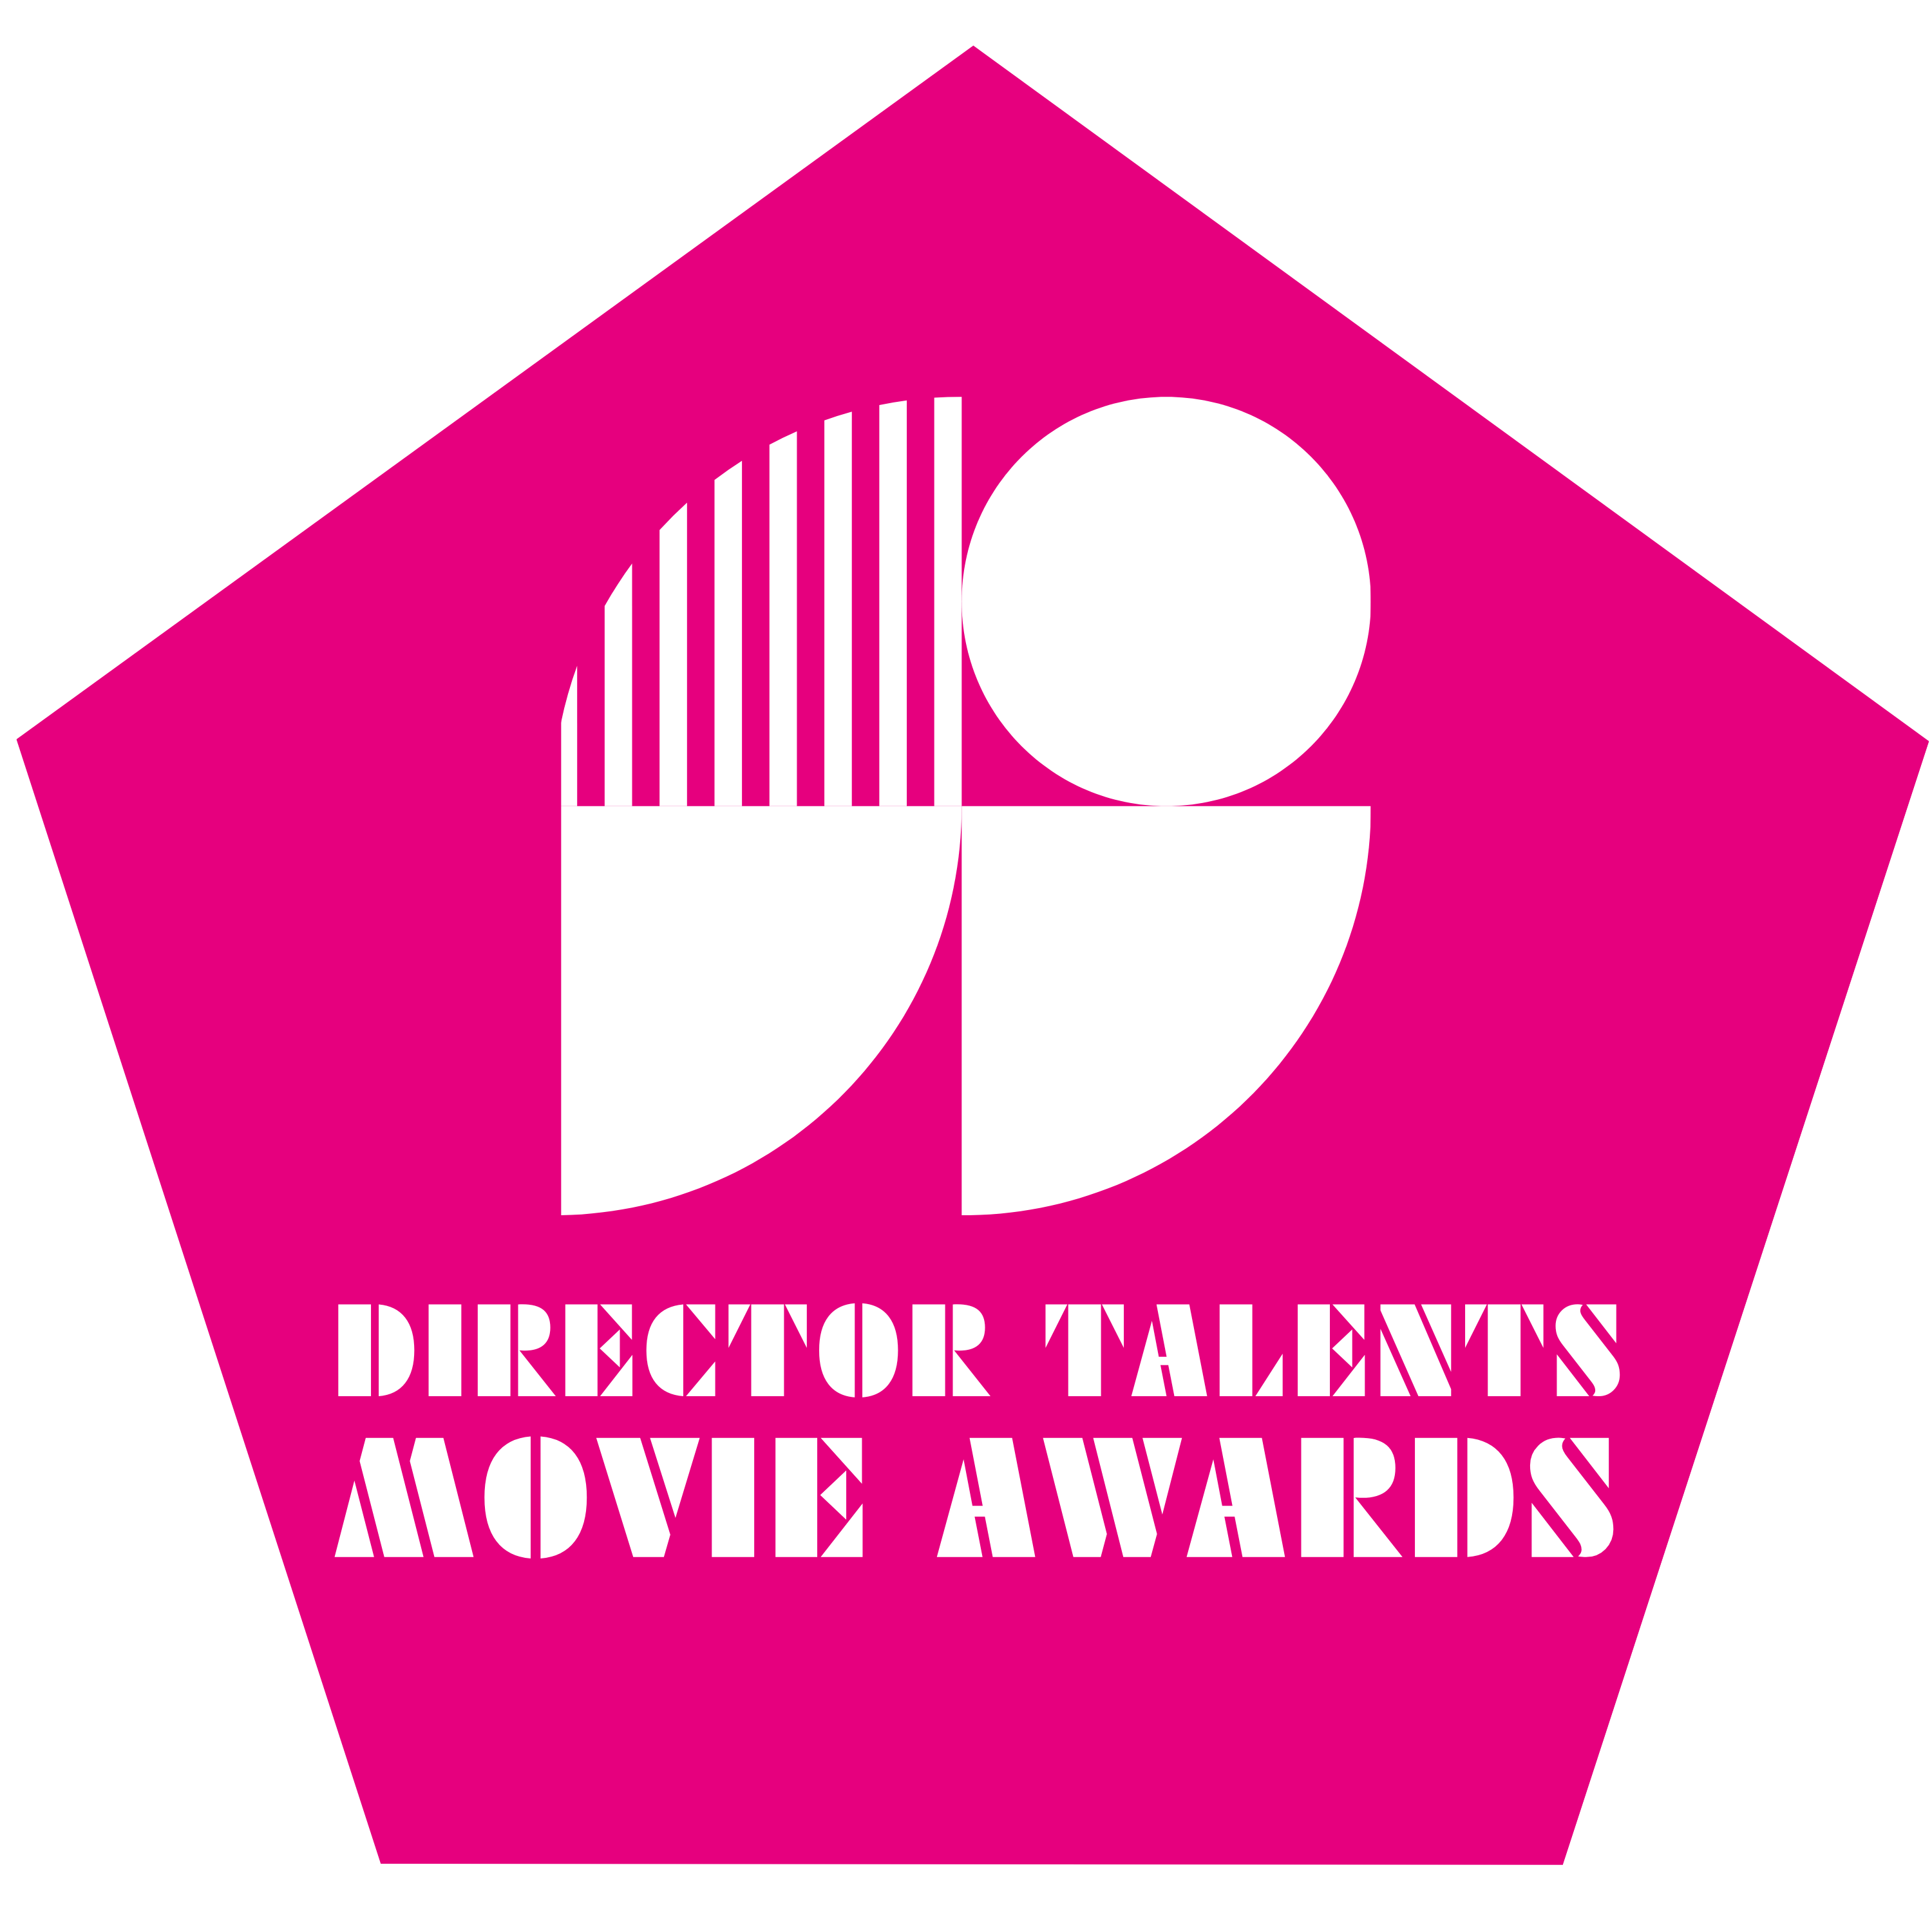 Director Talents Movie Awards